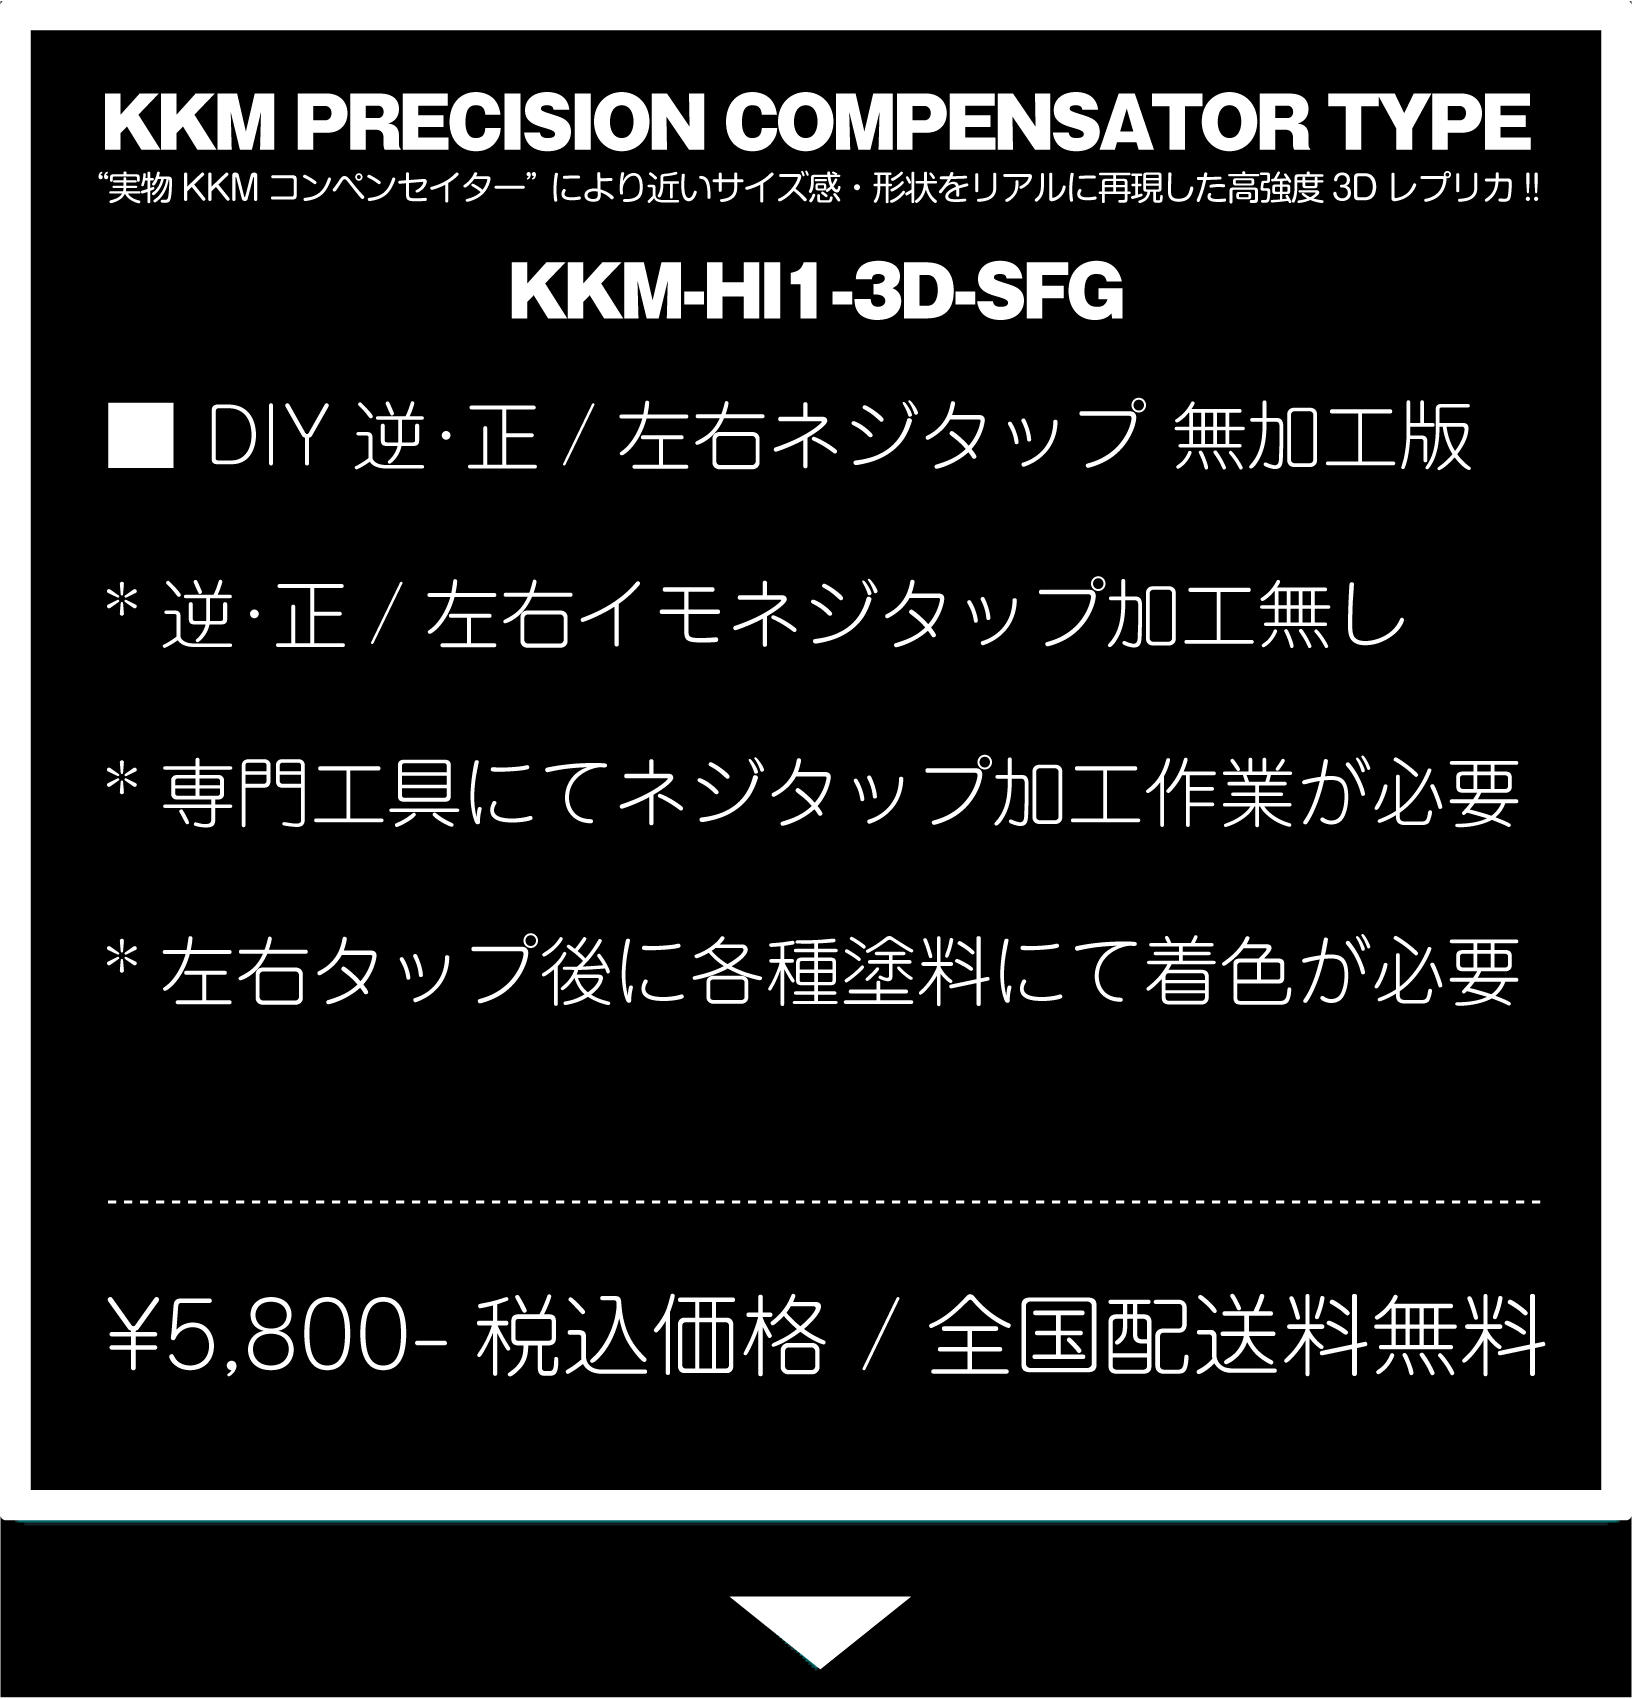 KKM PRECISION COMPENSATOR TYPE AIR SOFT HILOGstore KKM-HI1-3D-SFG